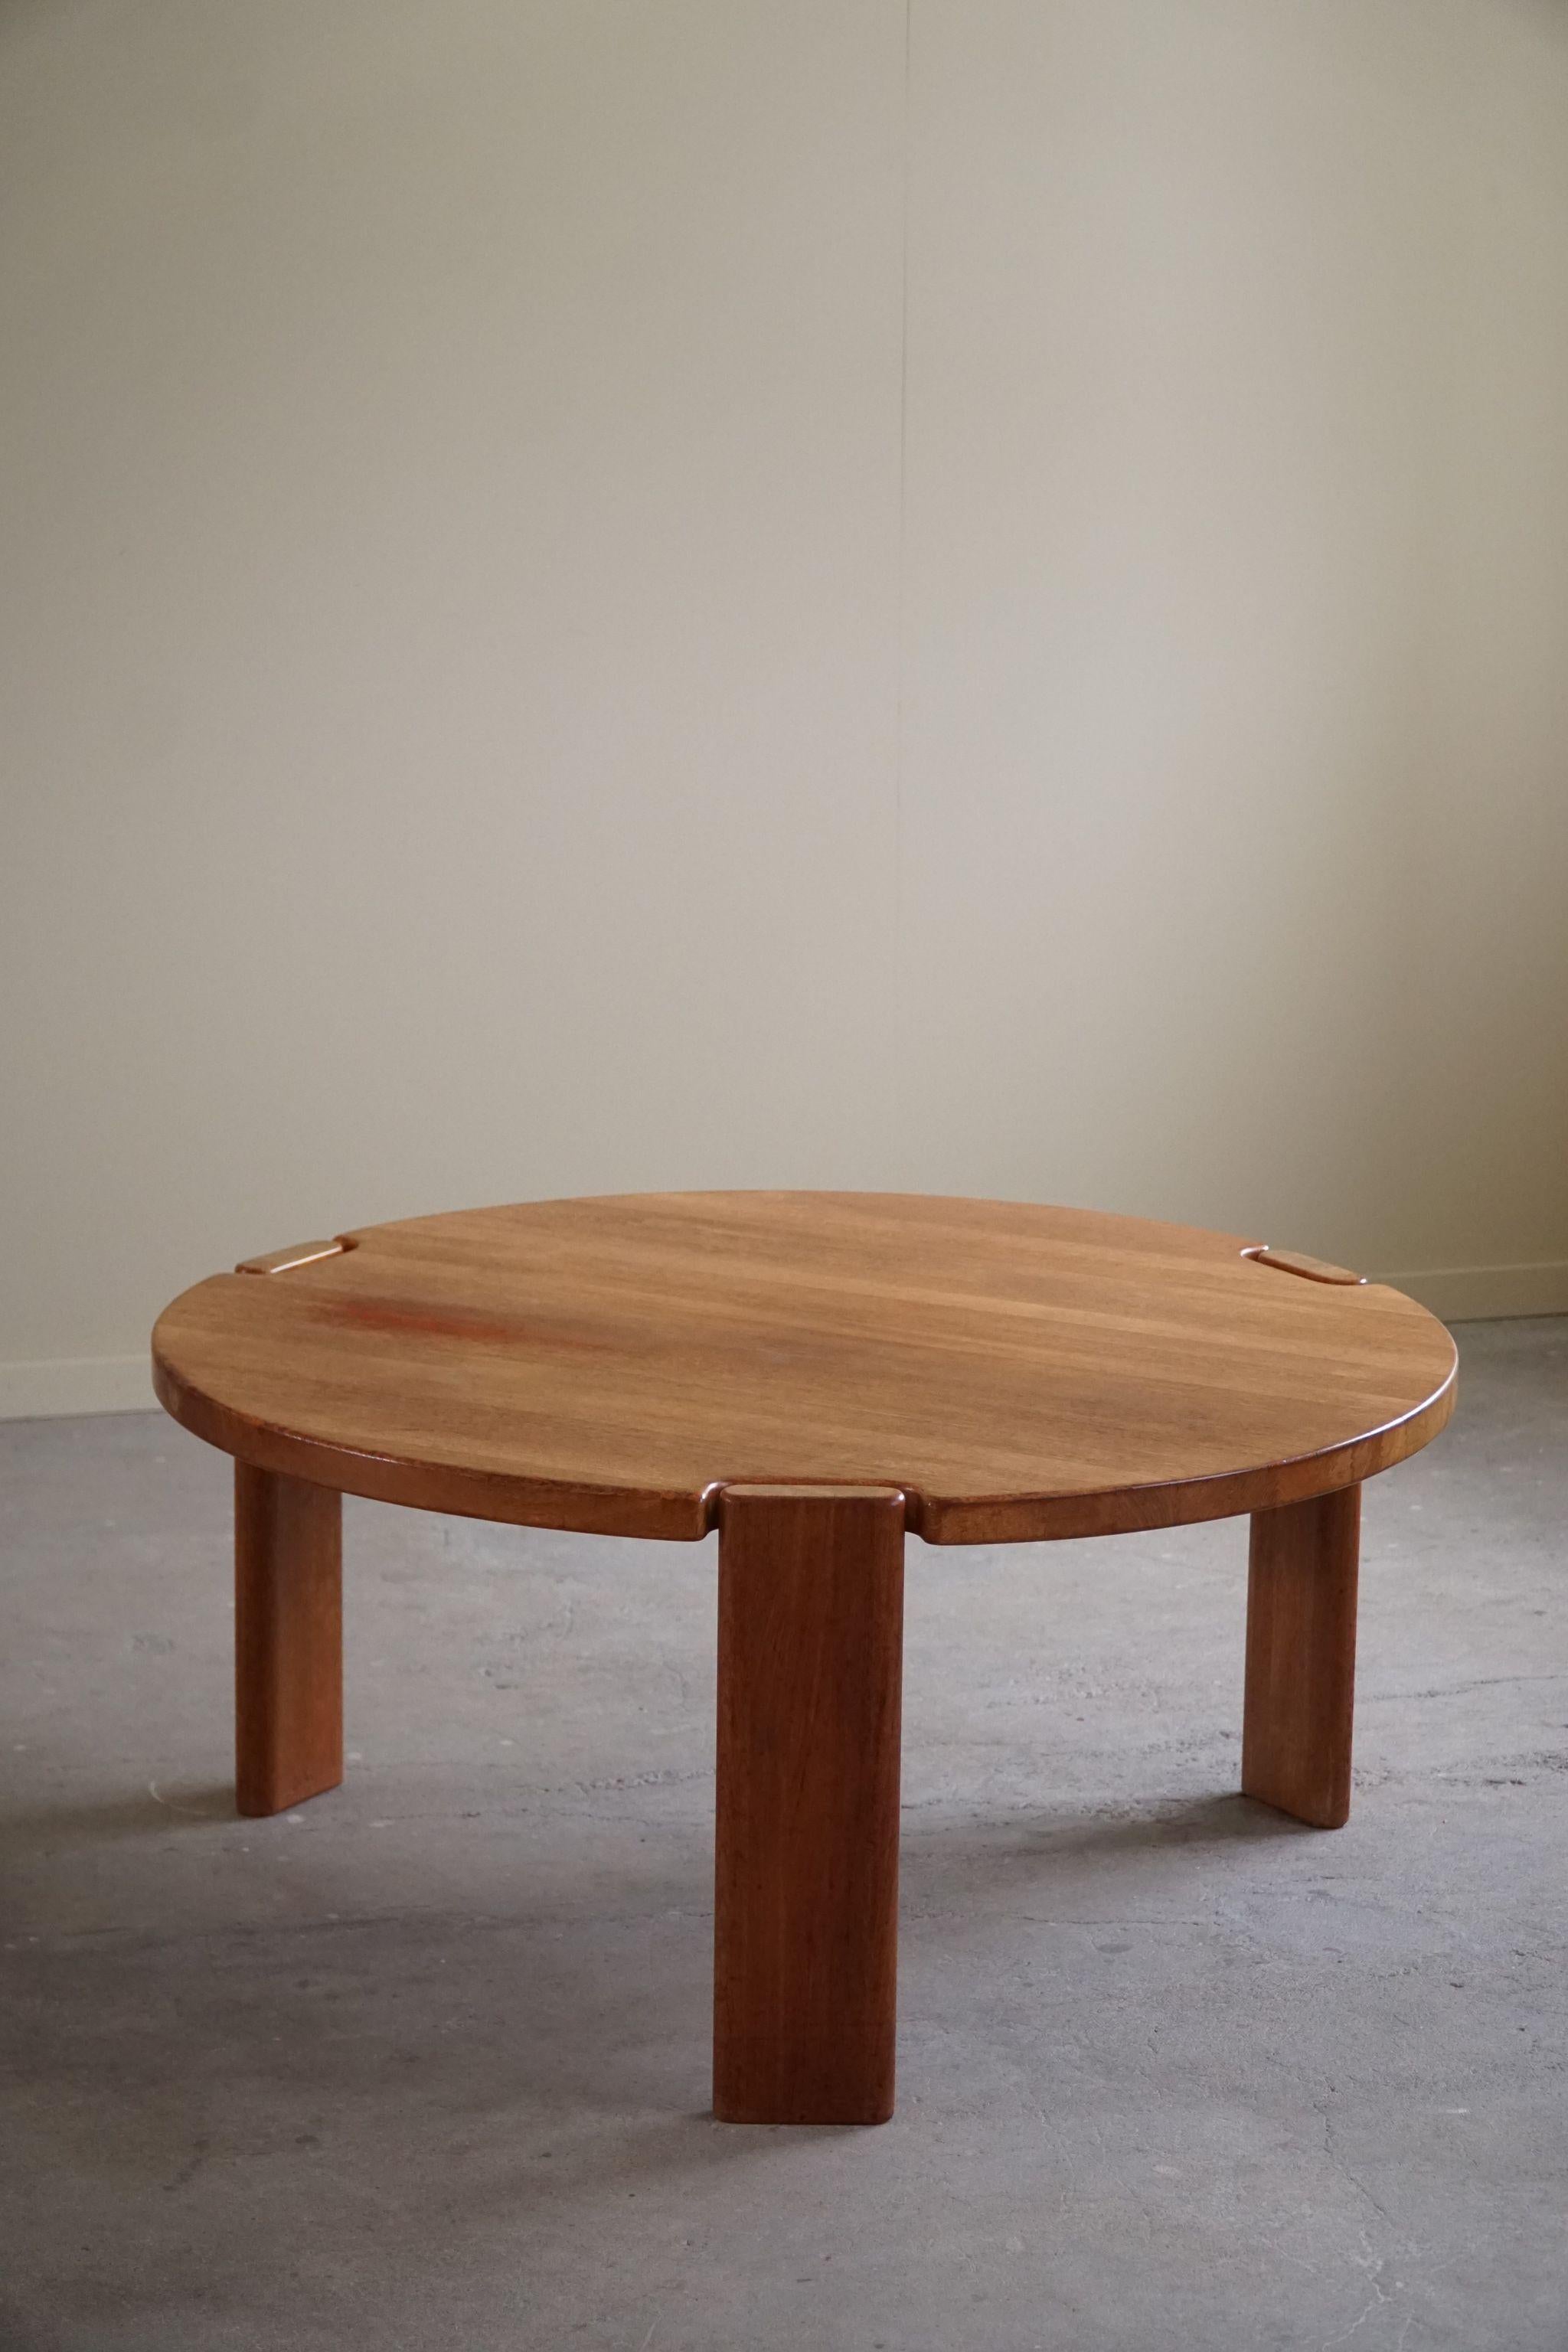 Round Sofa / Coffee Table in Teak, By Komfort, Danish Mid Century Modern, 1960s For Sale 10